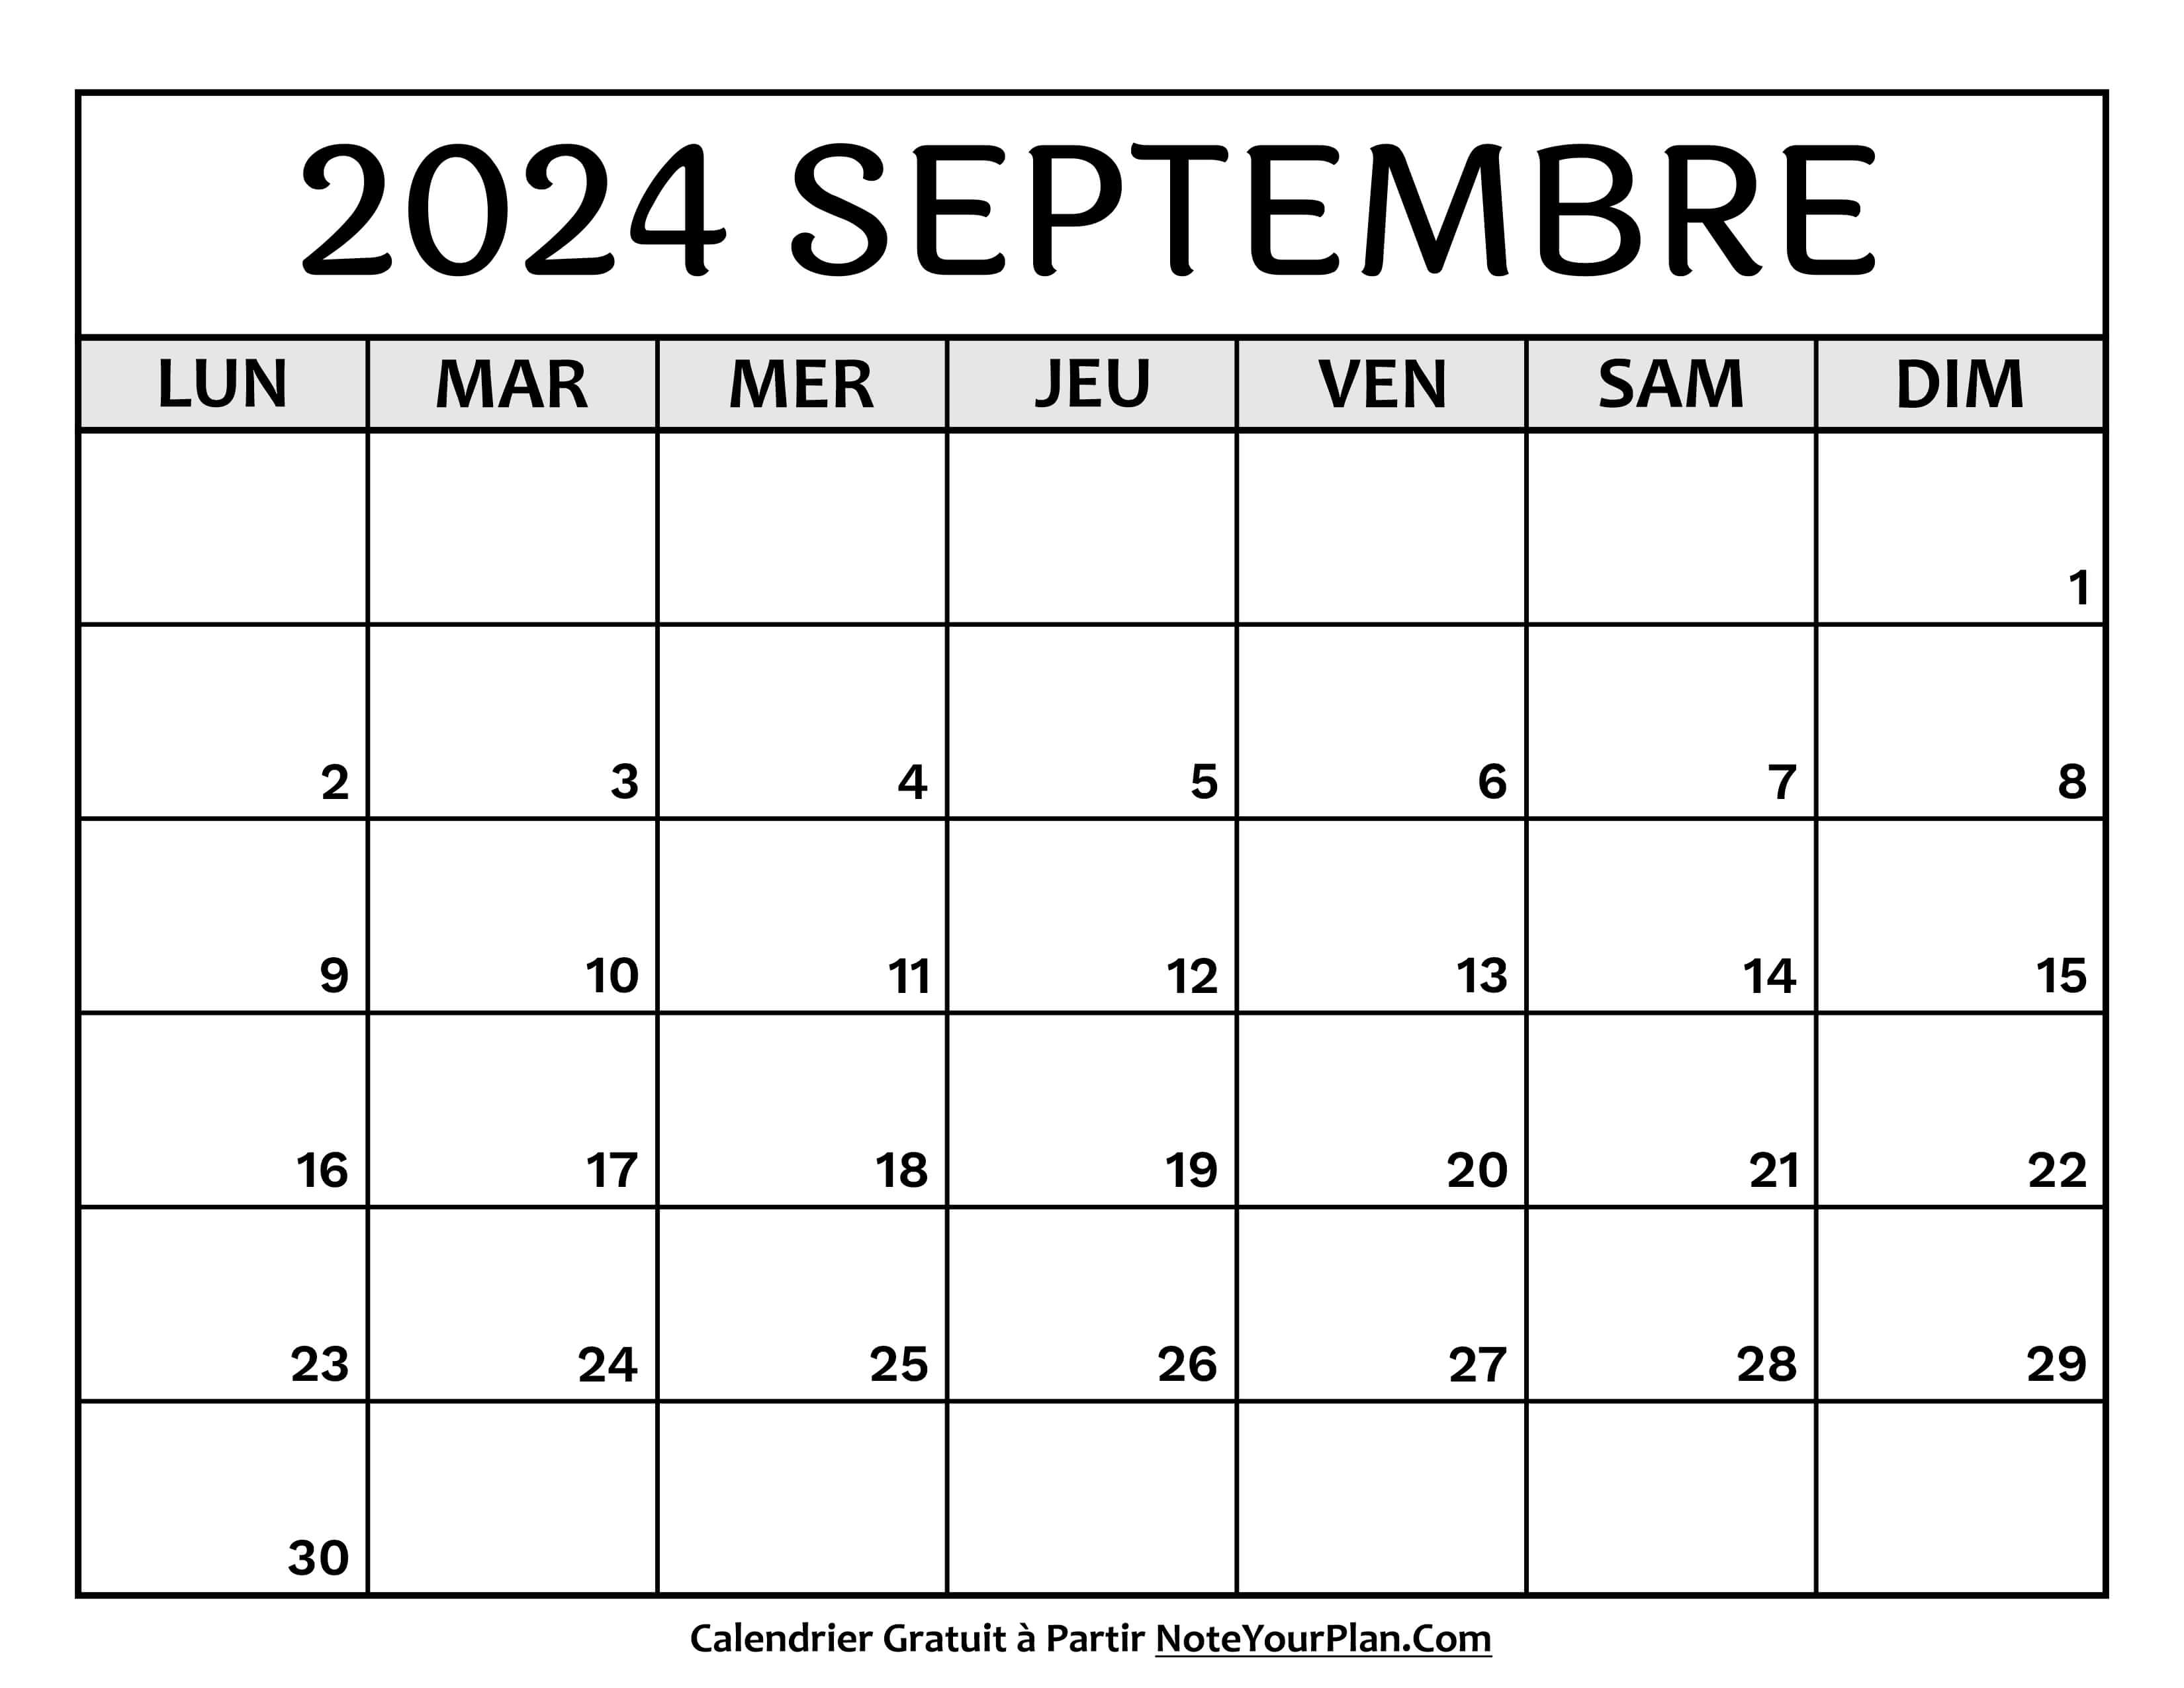 Calendrier Septembre 2024 à Imprimer